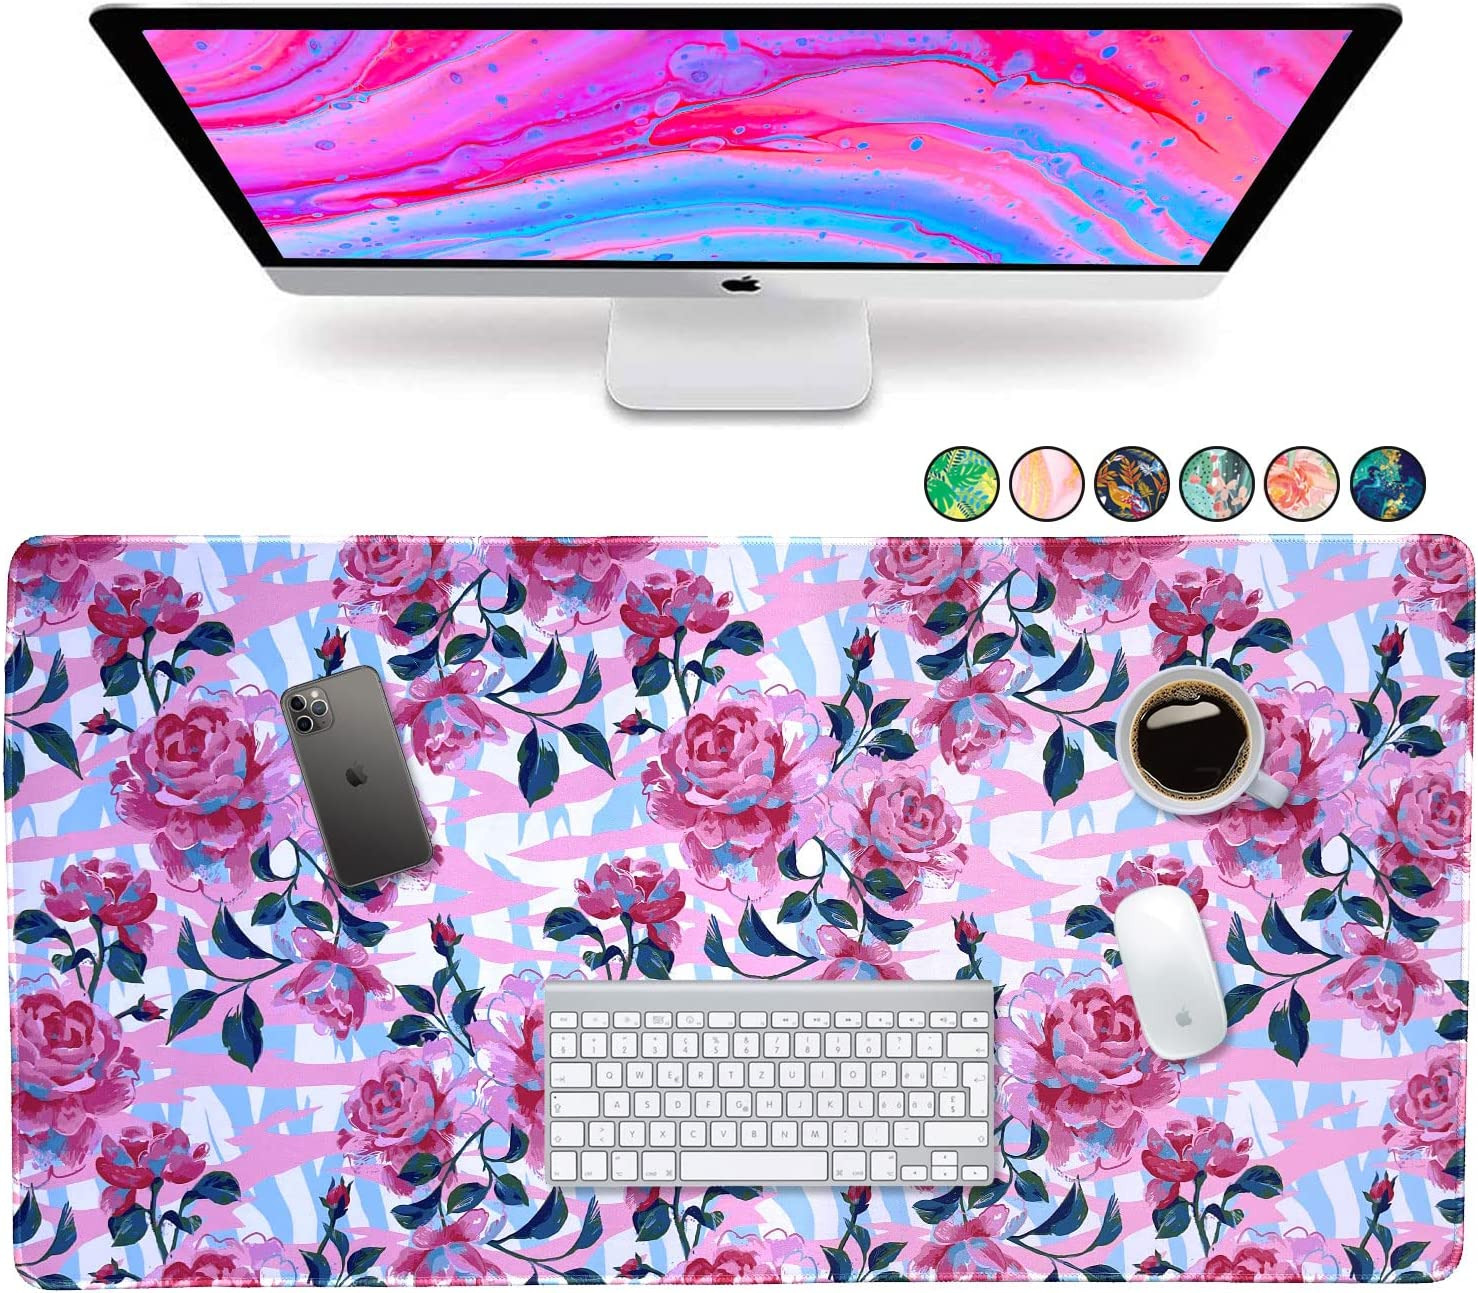 French Koko Large Mouse Pad, Desk Mat, Keyboard Pad, Desktop Home Office School 